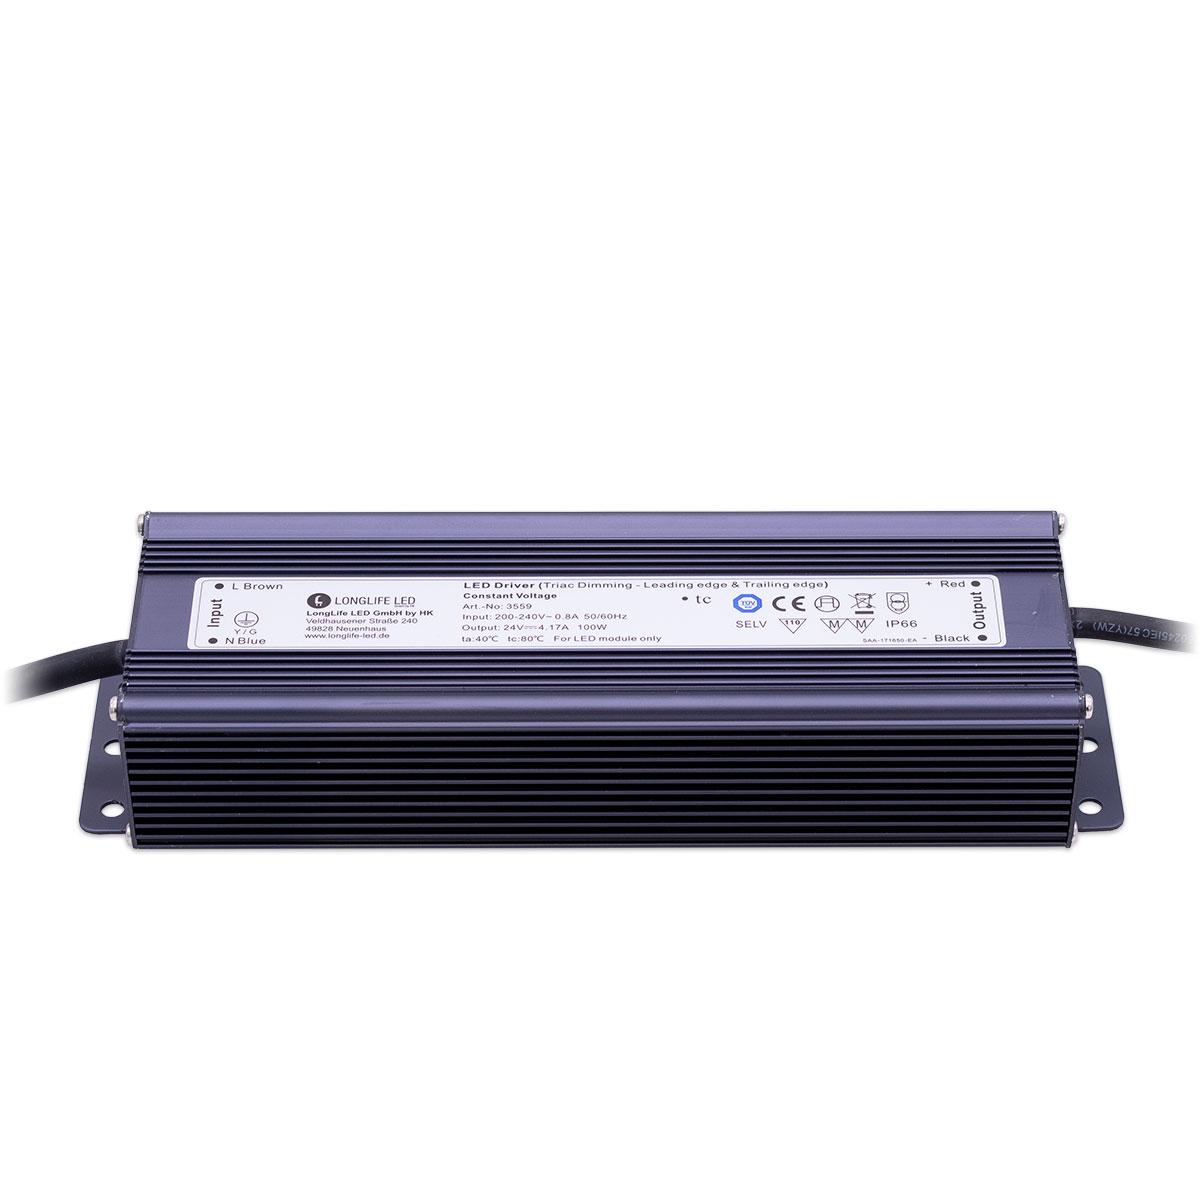 LED Netzteil 100W 24V 4.16A IP66 dimmbar TRIAC LongLife LED KVF-24100-TDH Schaltnetzteil CV